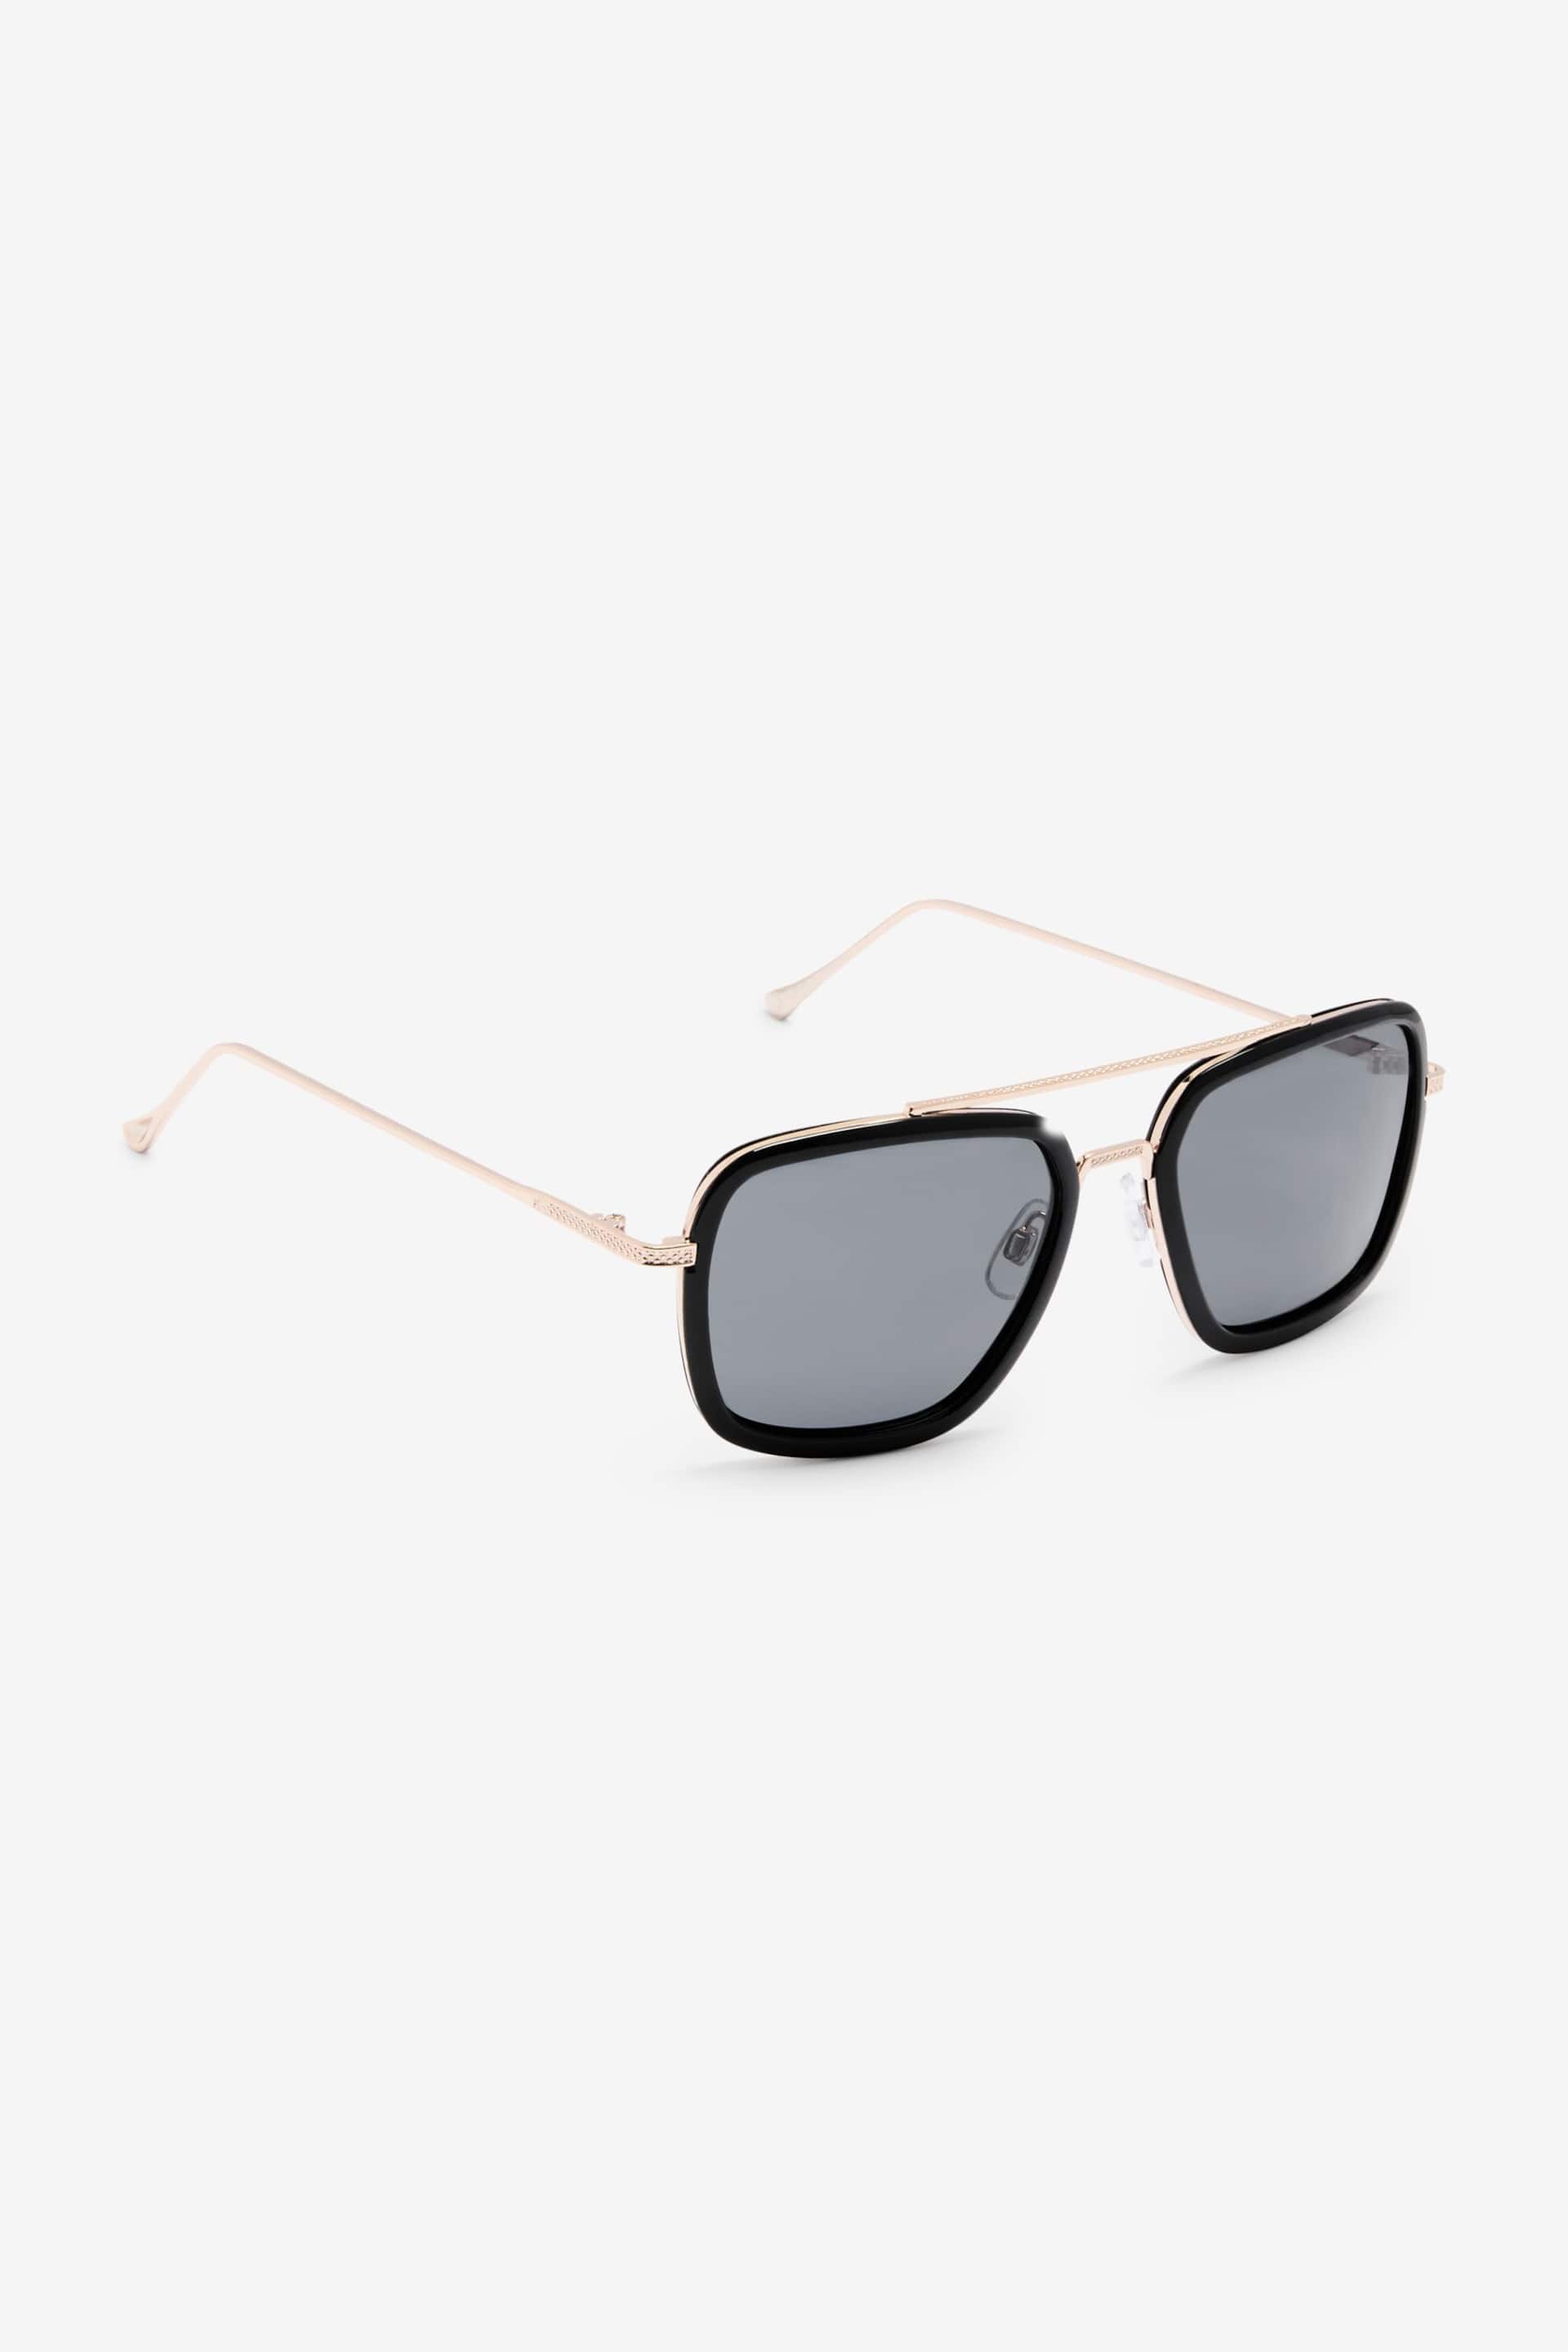 Black/Gold Navigator Polarised Sunglasses - Image 2 of 4